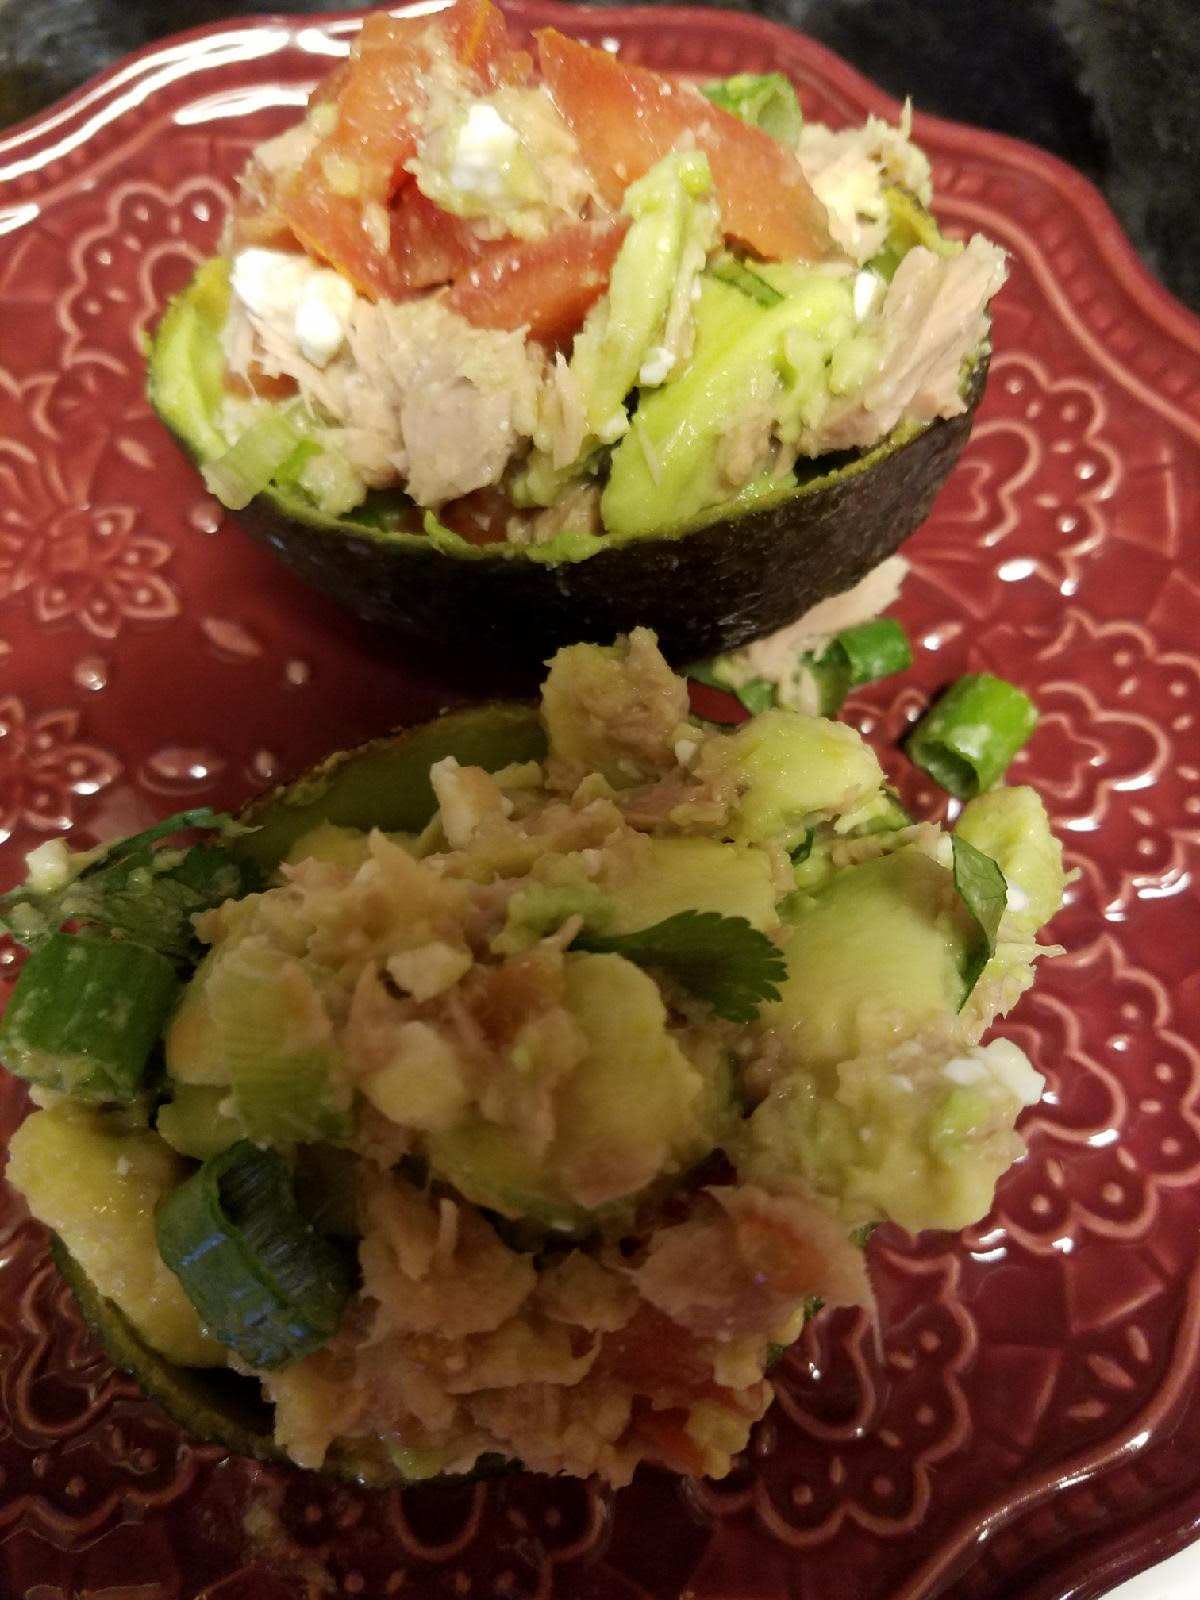 Avocado, Tuna, and Tomato Salad